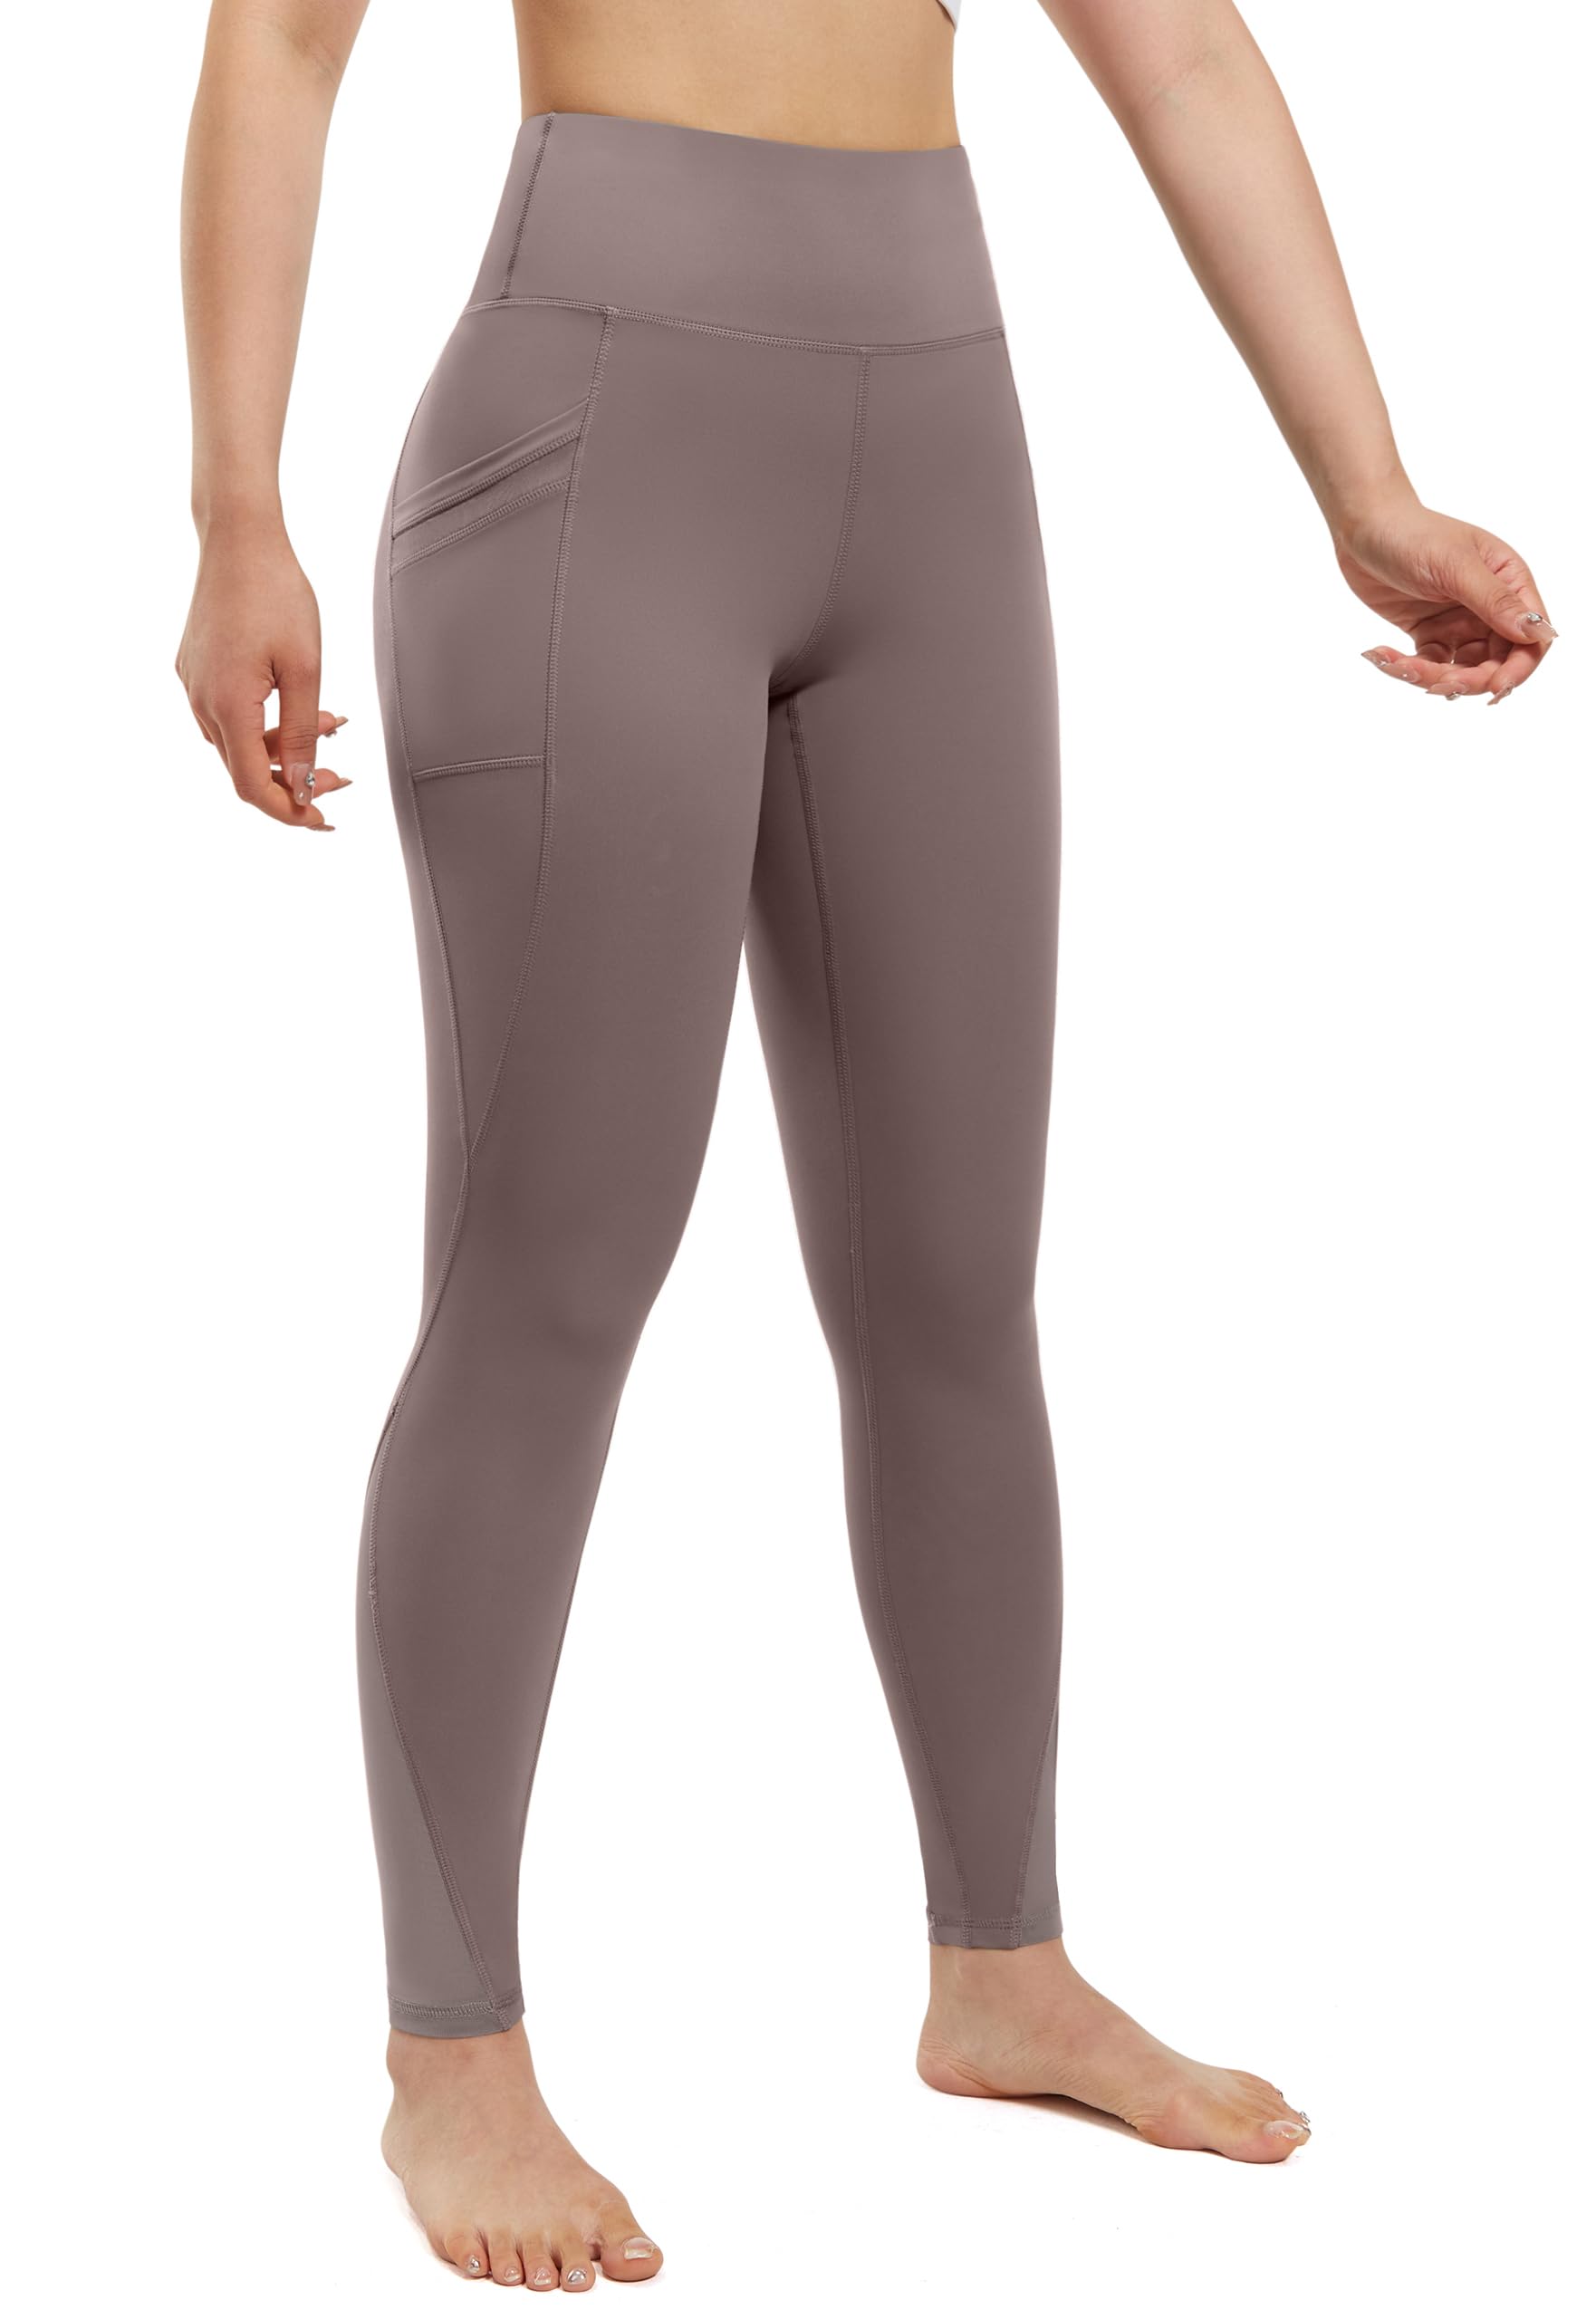 AFITNE Women’s High Waist Mesh Yoga Leggings with Side Pockets, Tummy Control Workout Squat-Proof Yoga Pants